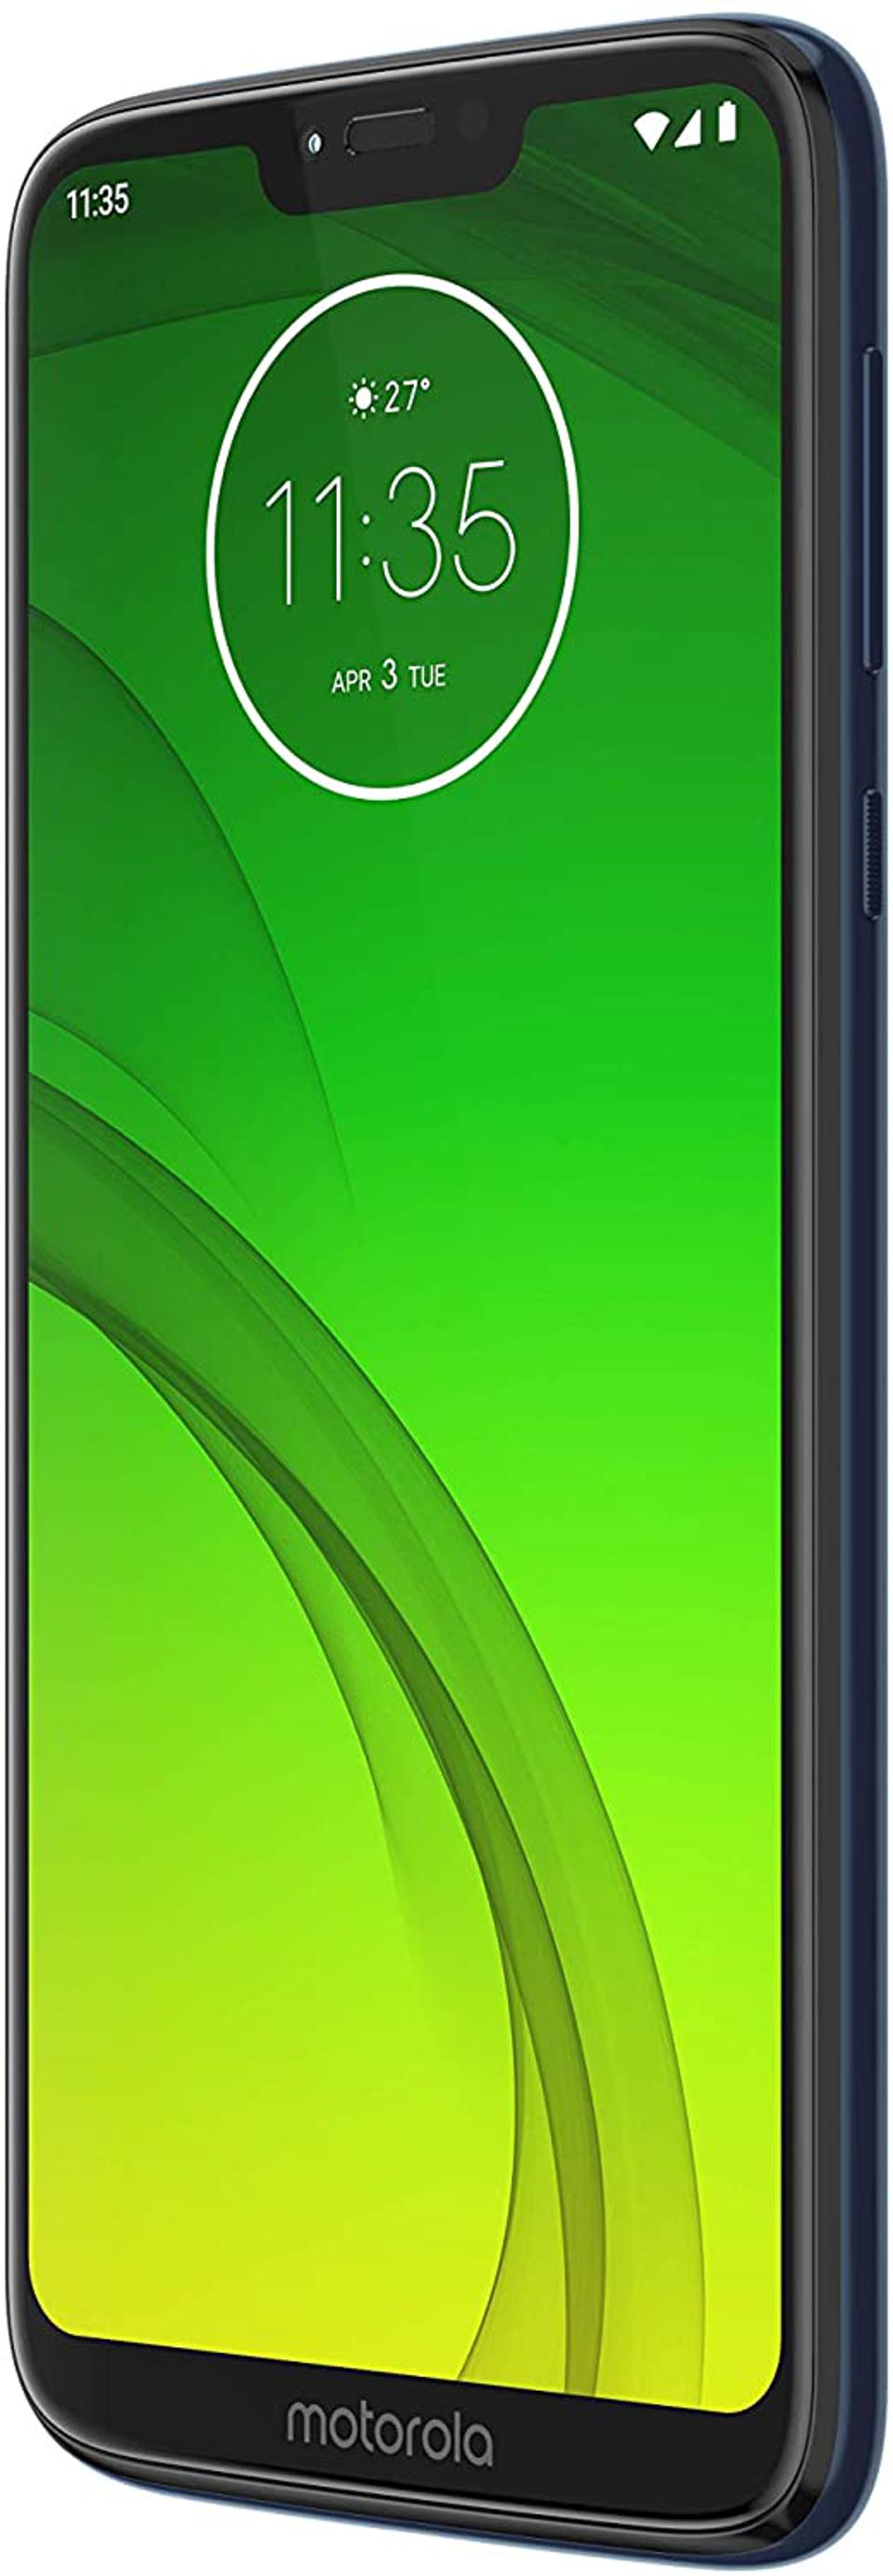 Motorola Moto G7 Power - Unlocked - 32GB - Marine Blue (US Warranty) - Verizon, AT&T, T-Mobile, Sprint, Boost, Cricket, Metro